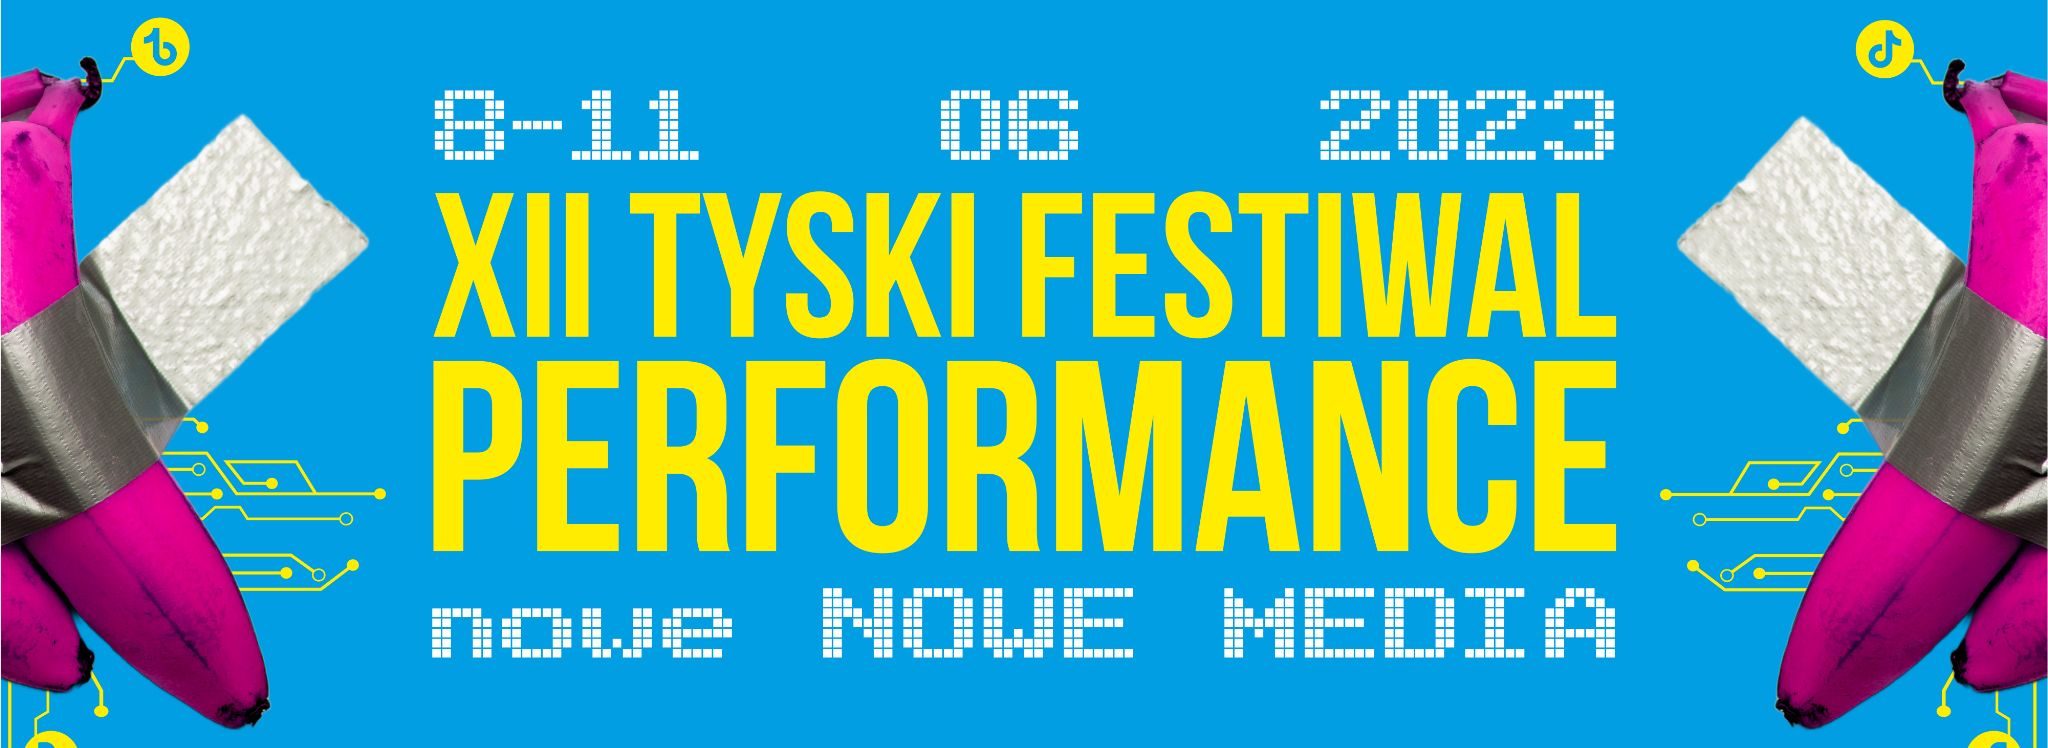 Xii tyski festiwal performance plakat